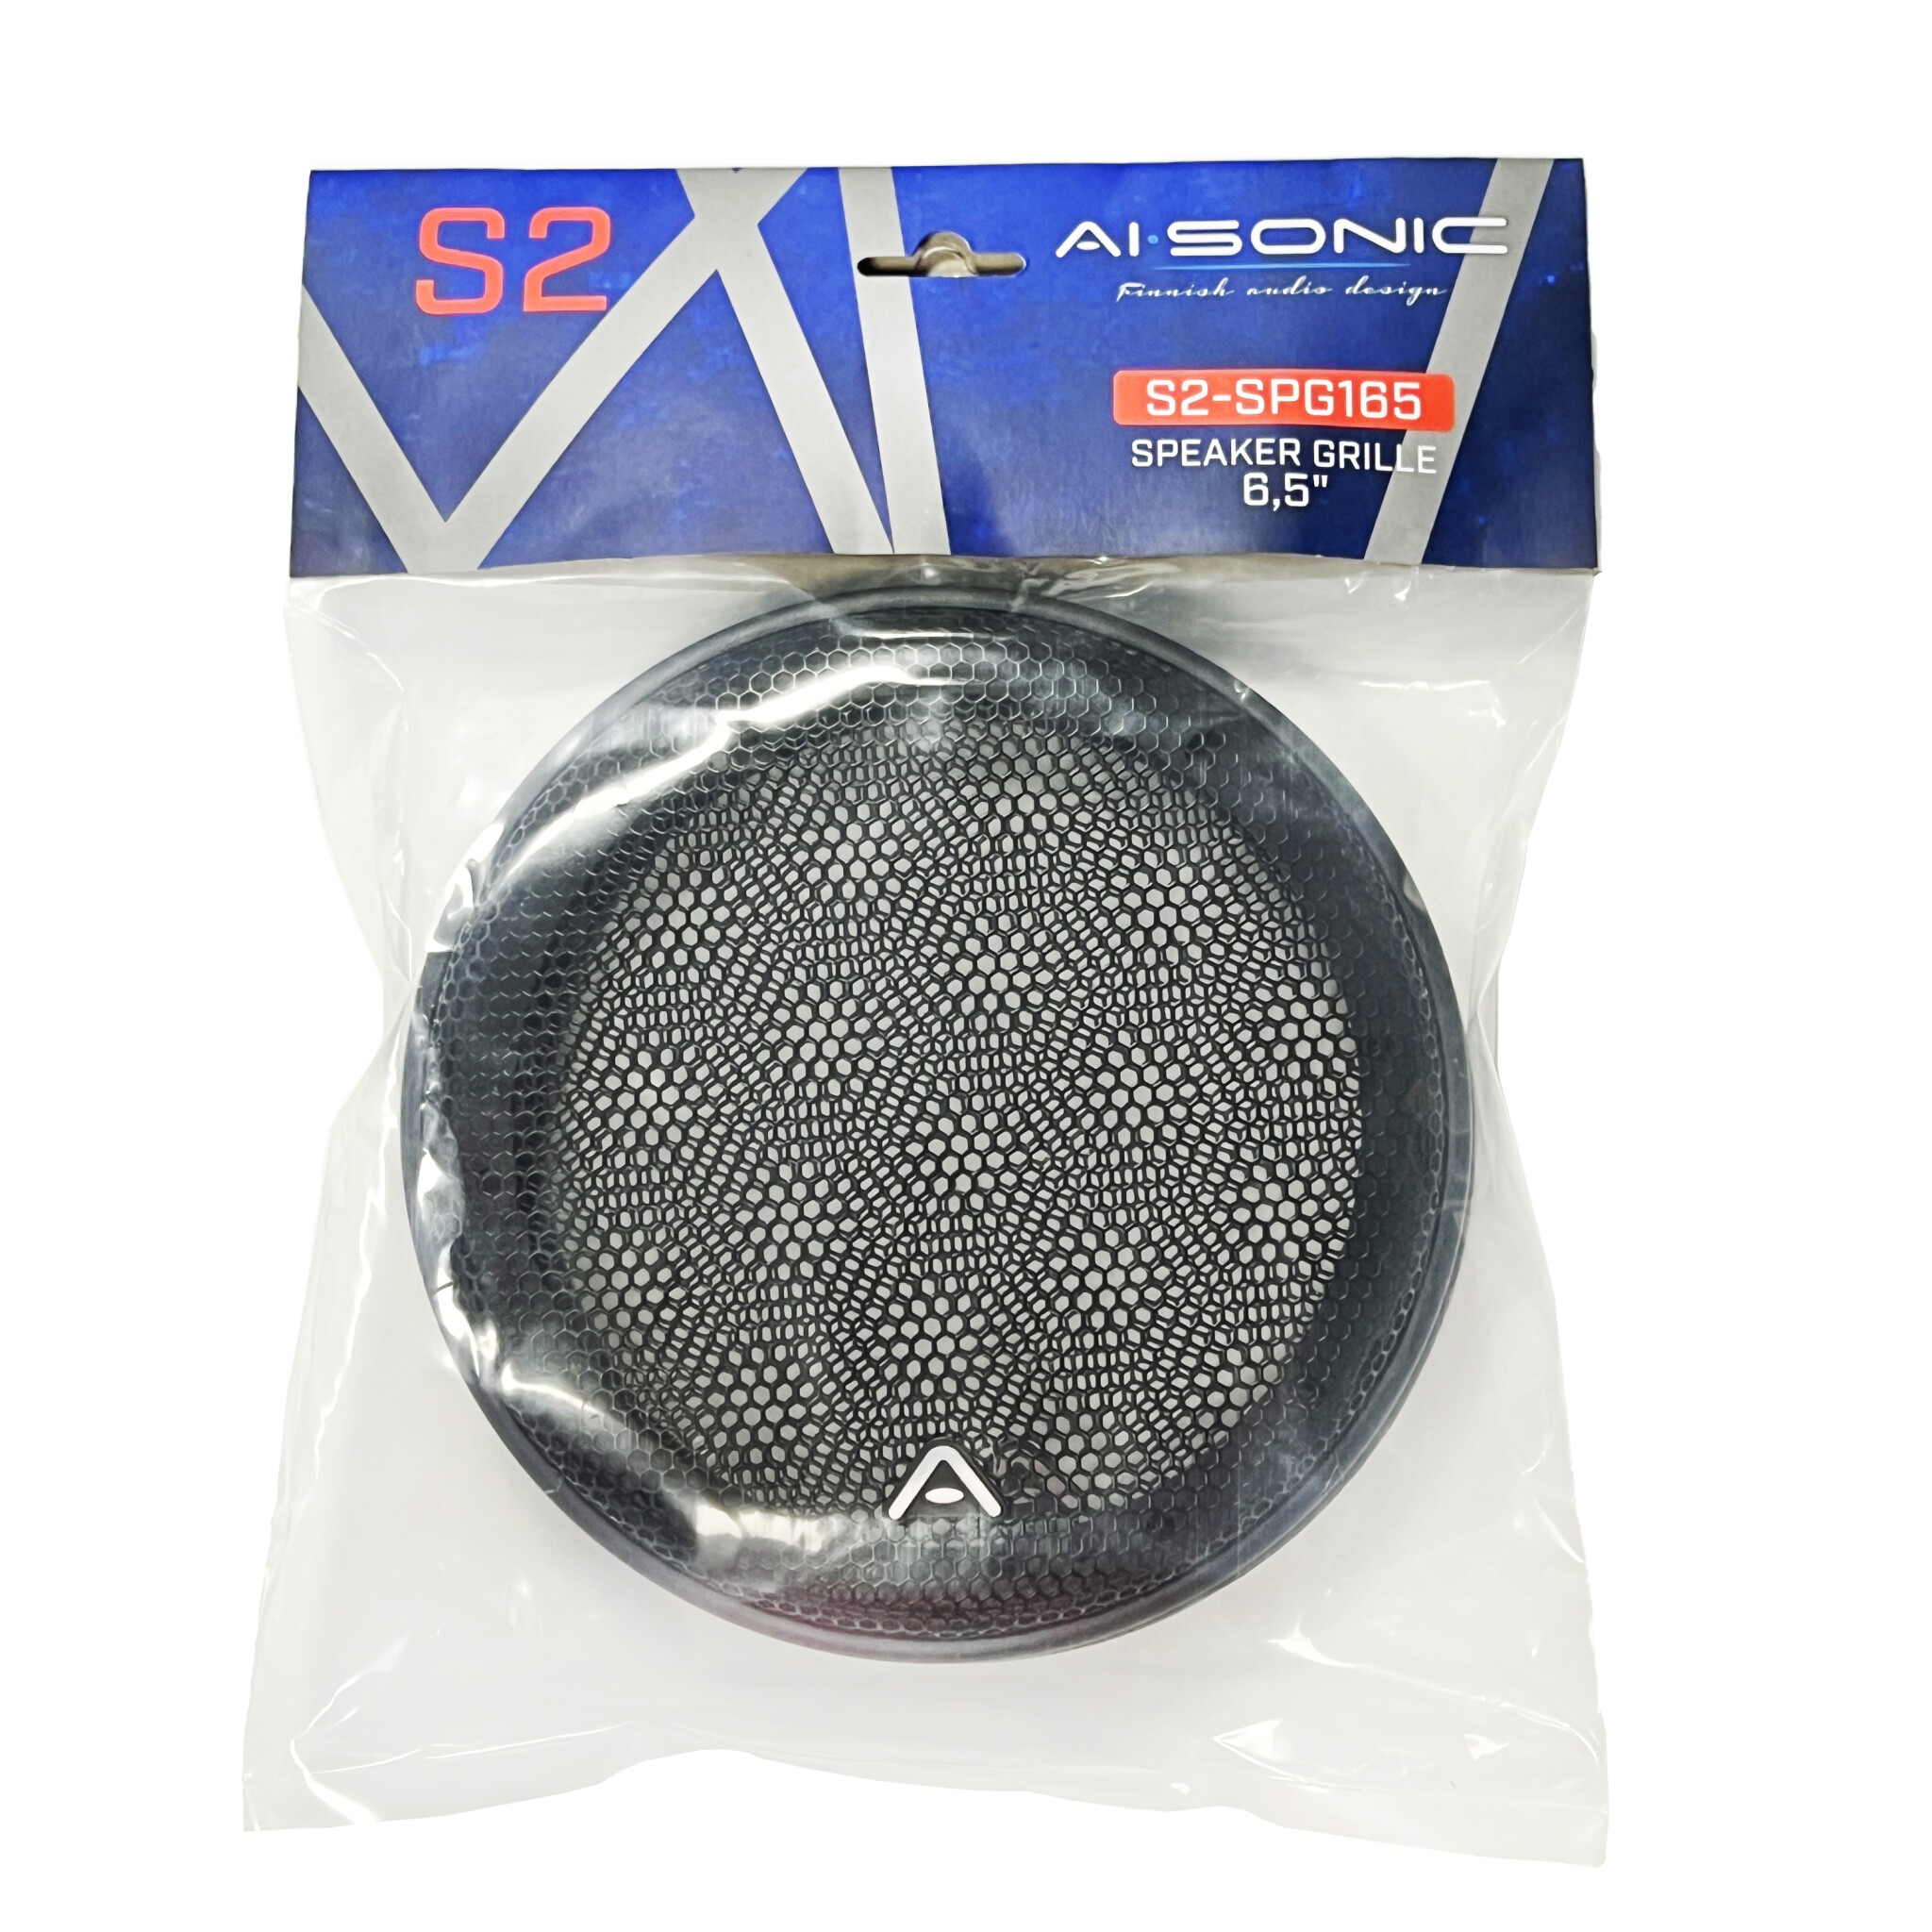 AI-SONIC S2 Speaker Grill 6.5″